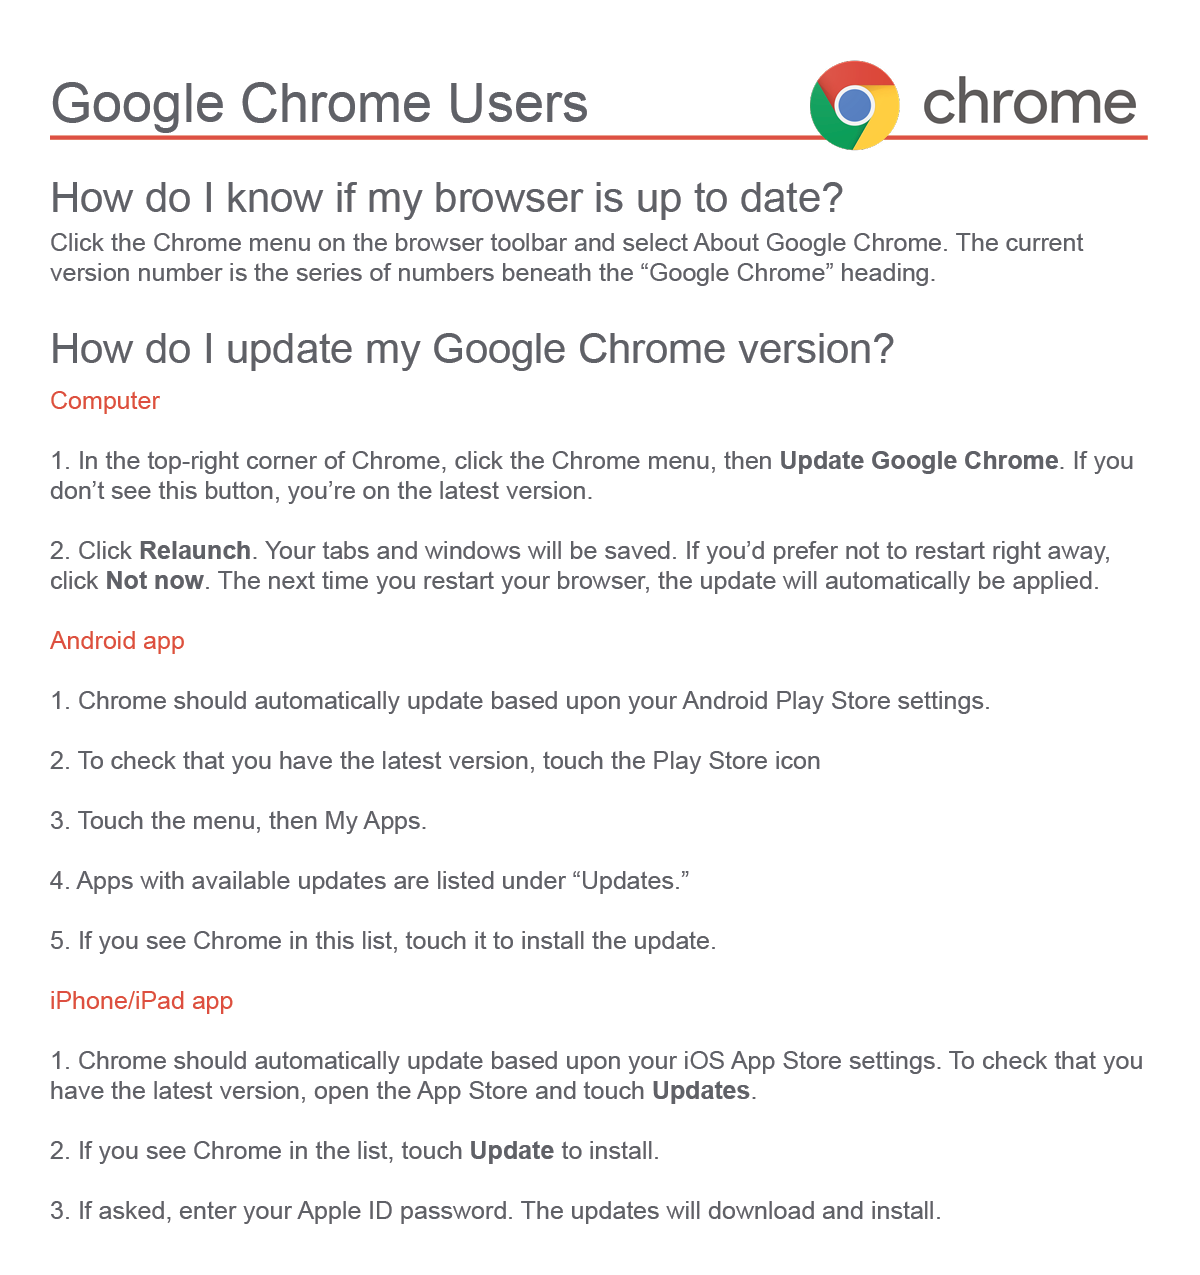 Google chrome users